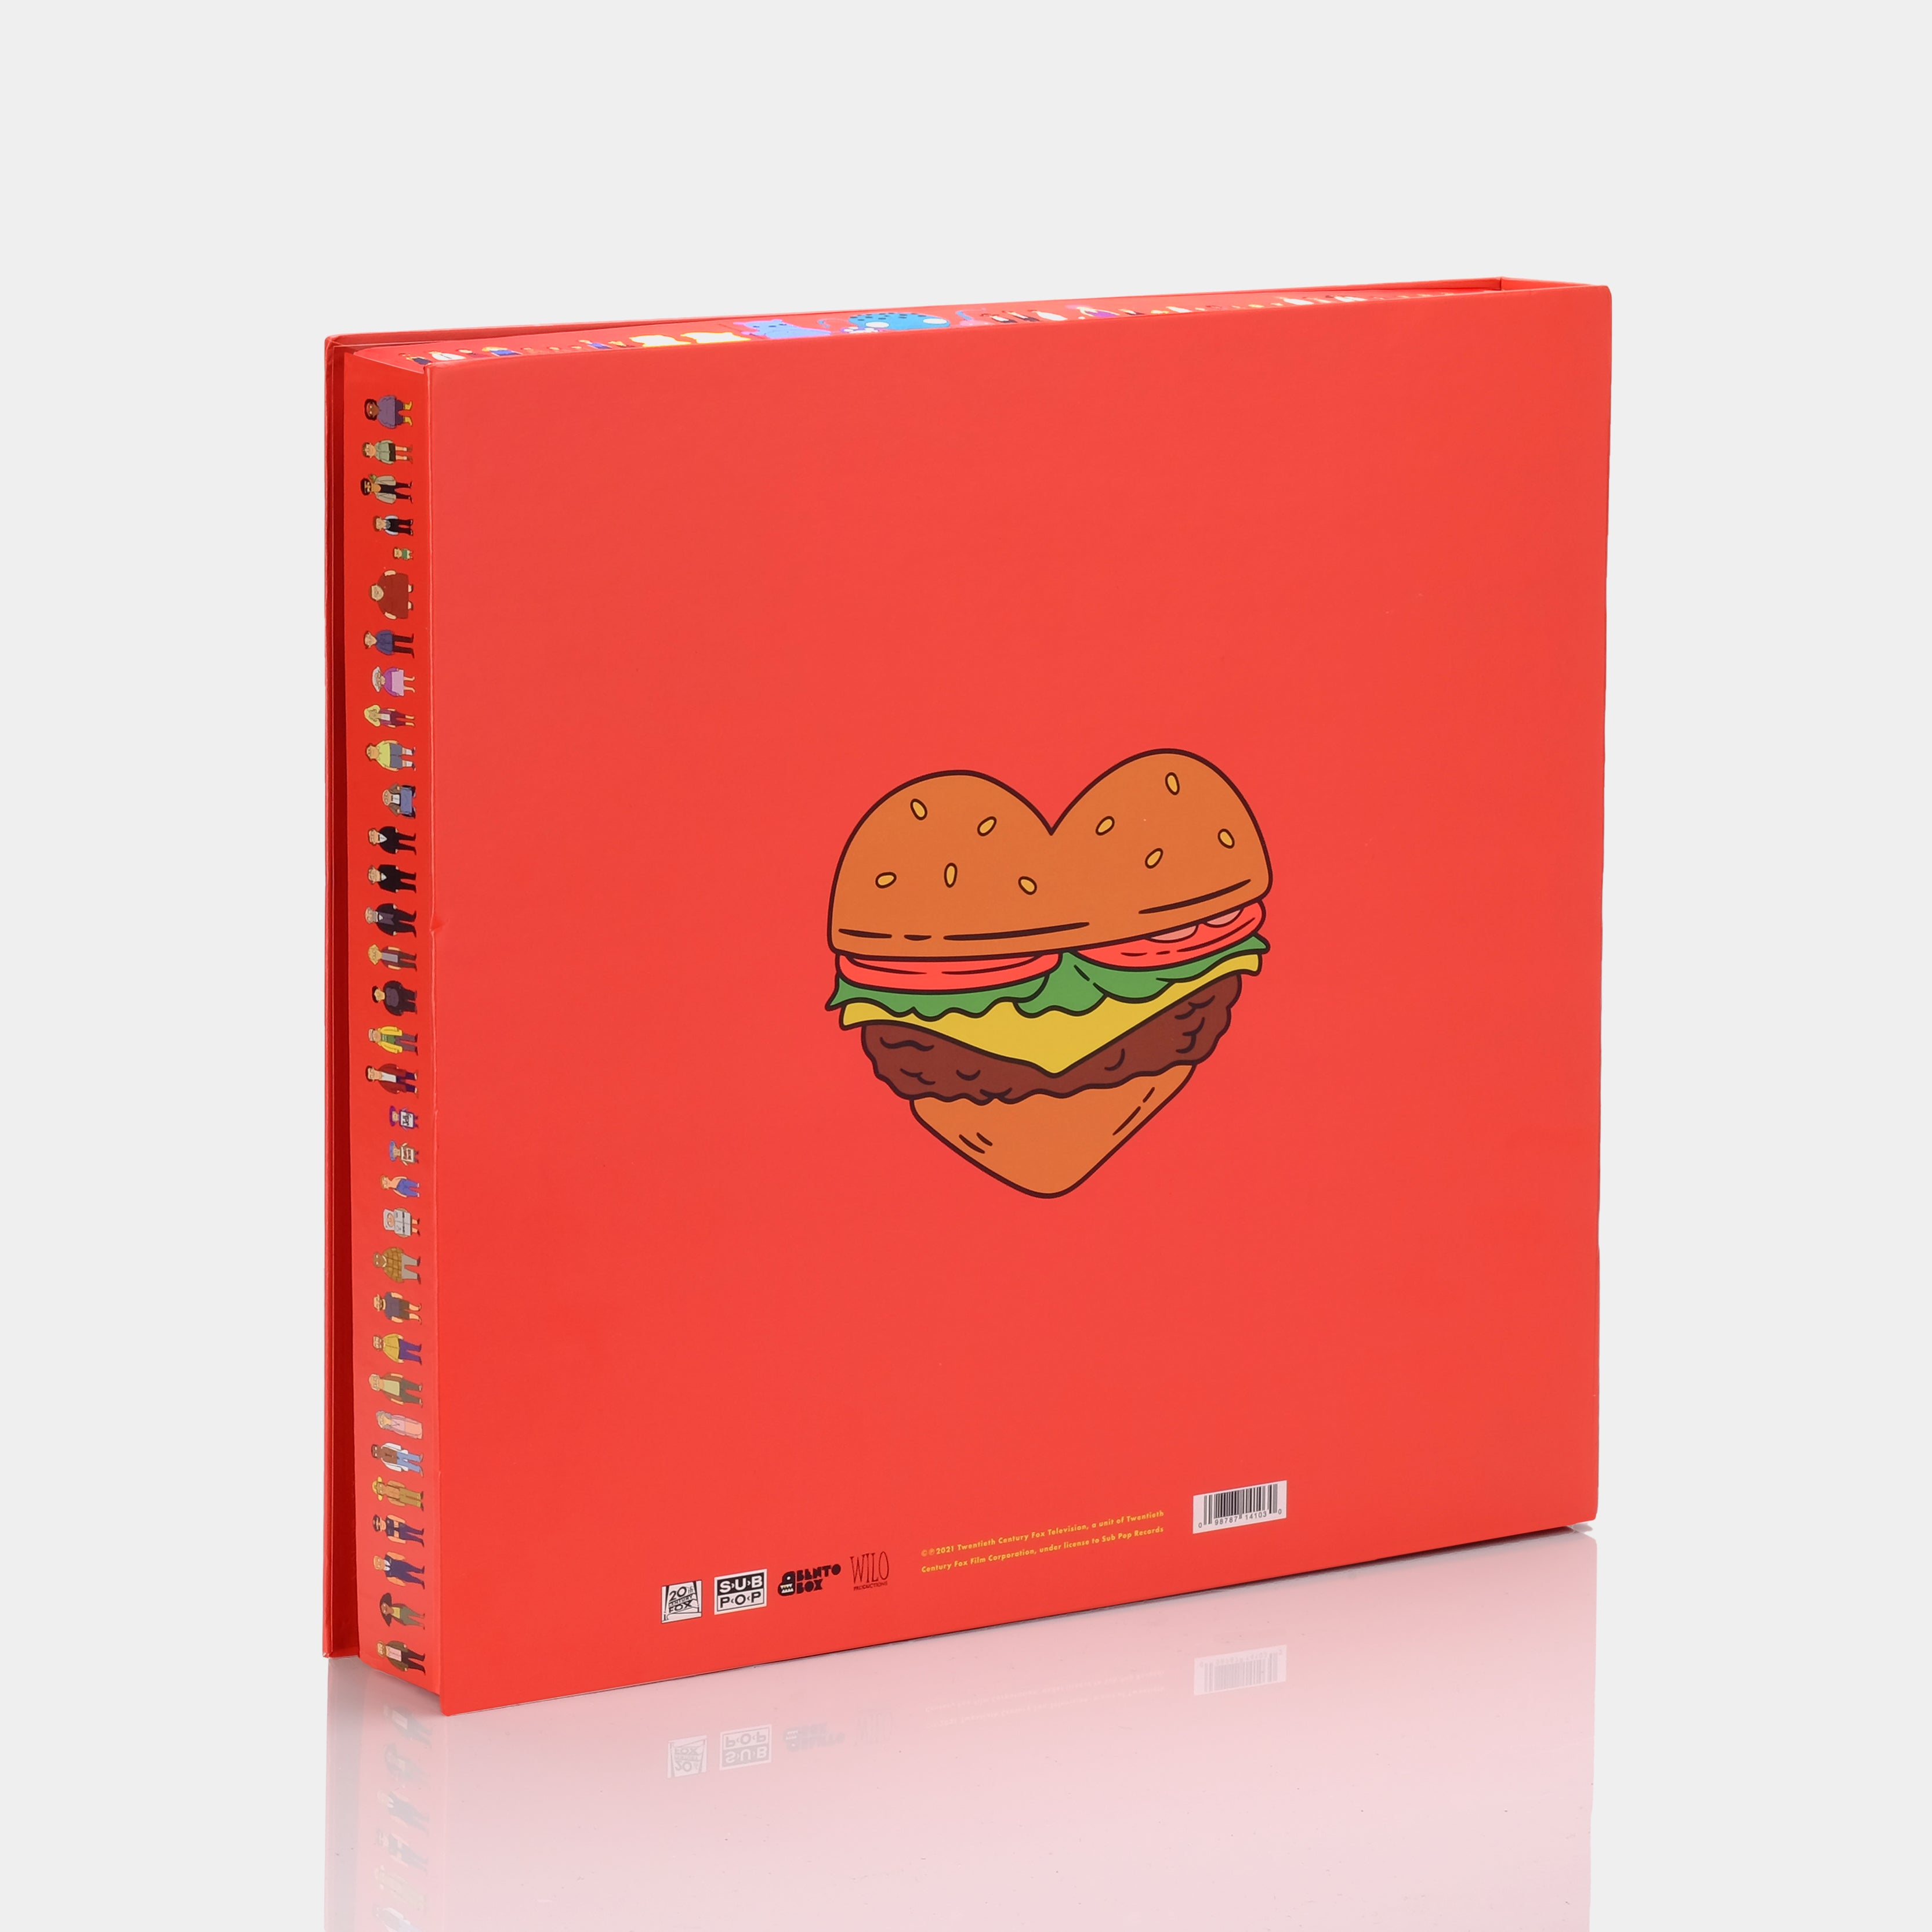 Bob's Burgers - The Bob's Burgers Music Album (Vol. 2) 3xLP Multicolored Vinyl Record Deluxe Box Set